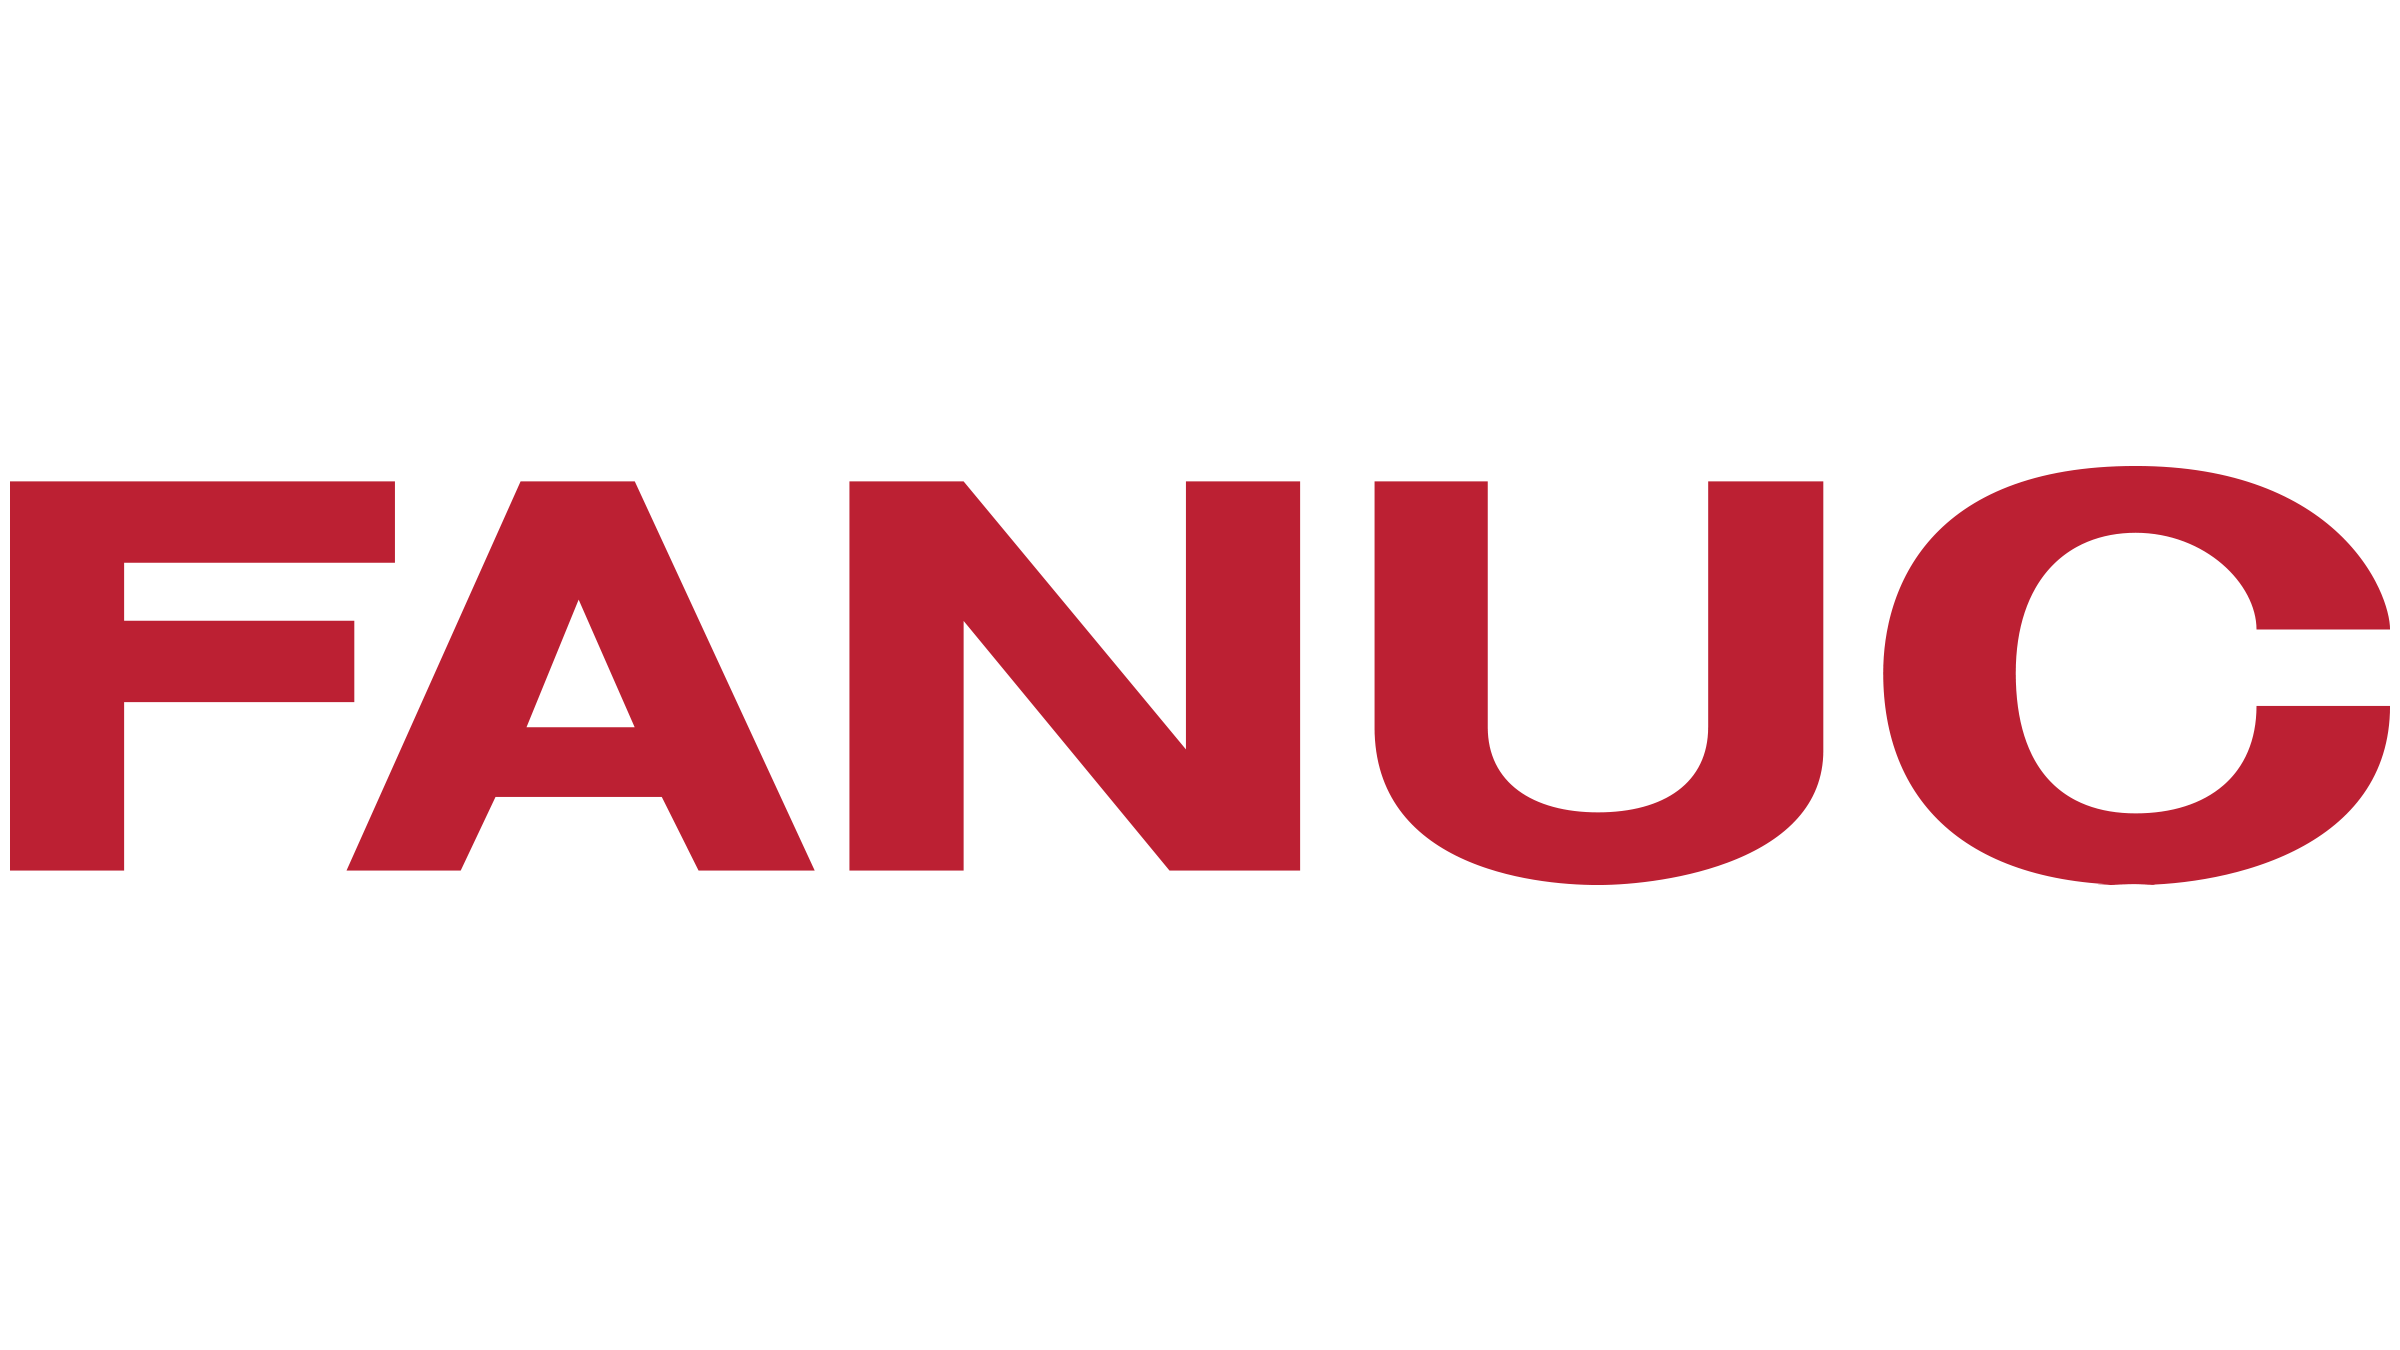 Red FANUC logo